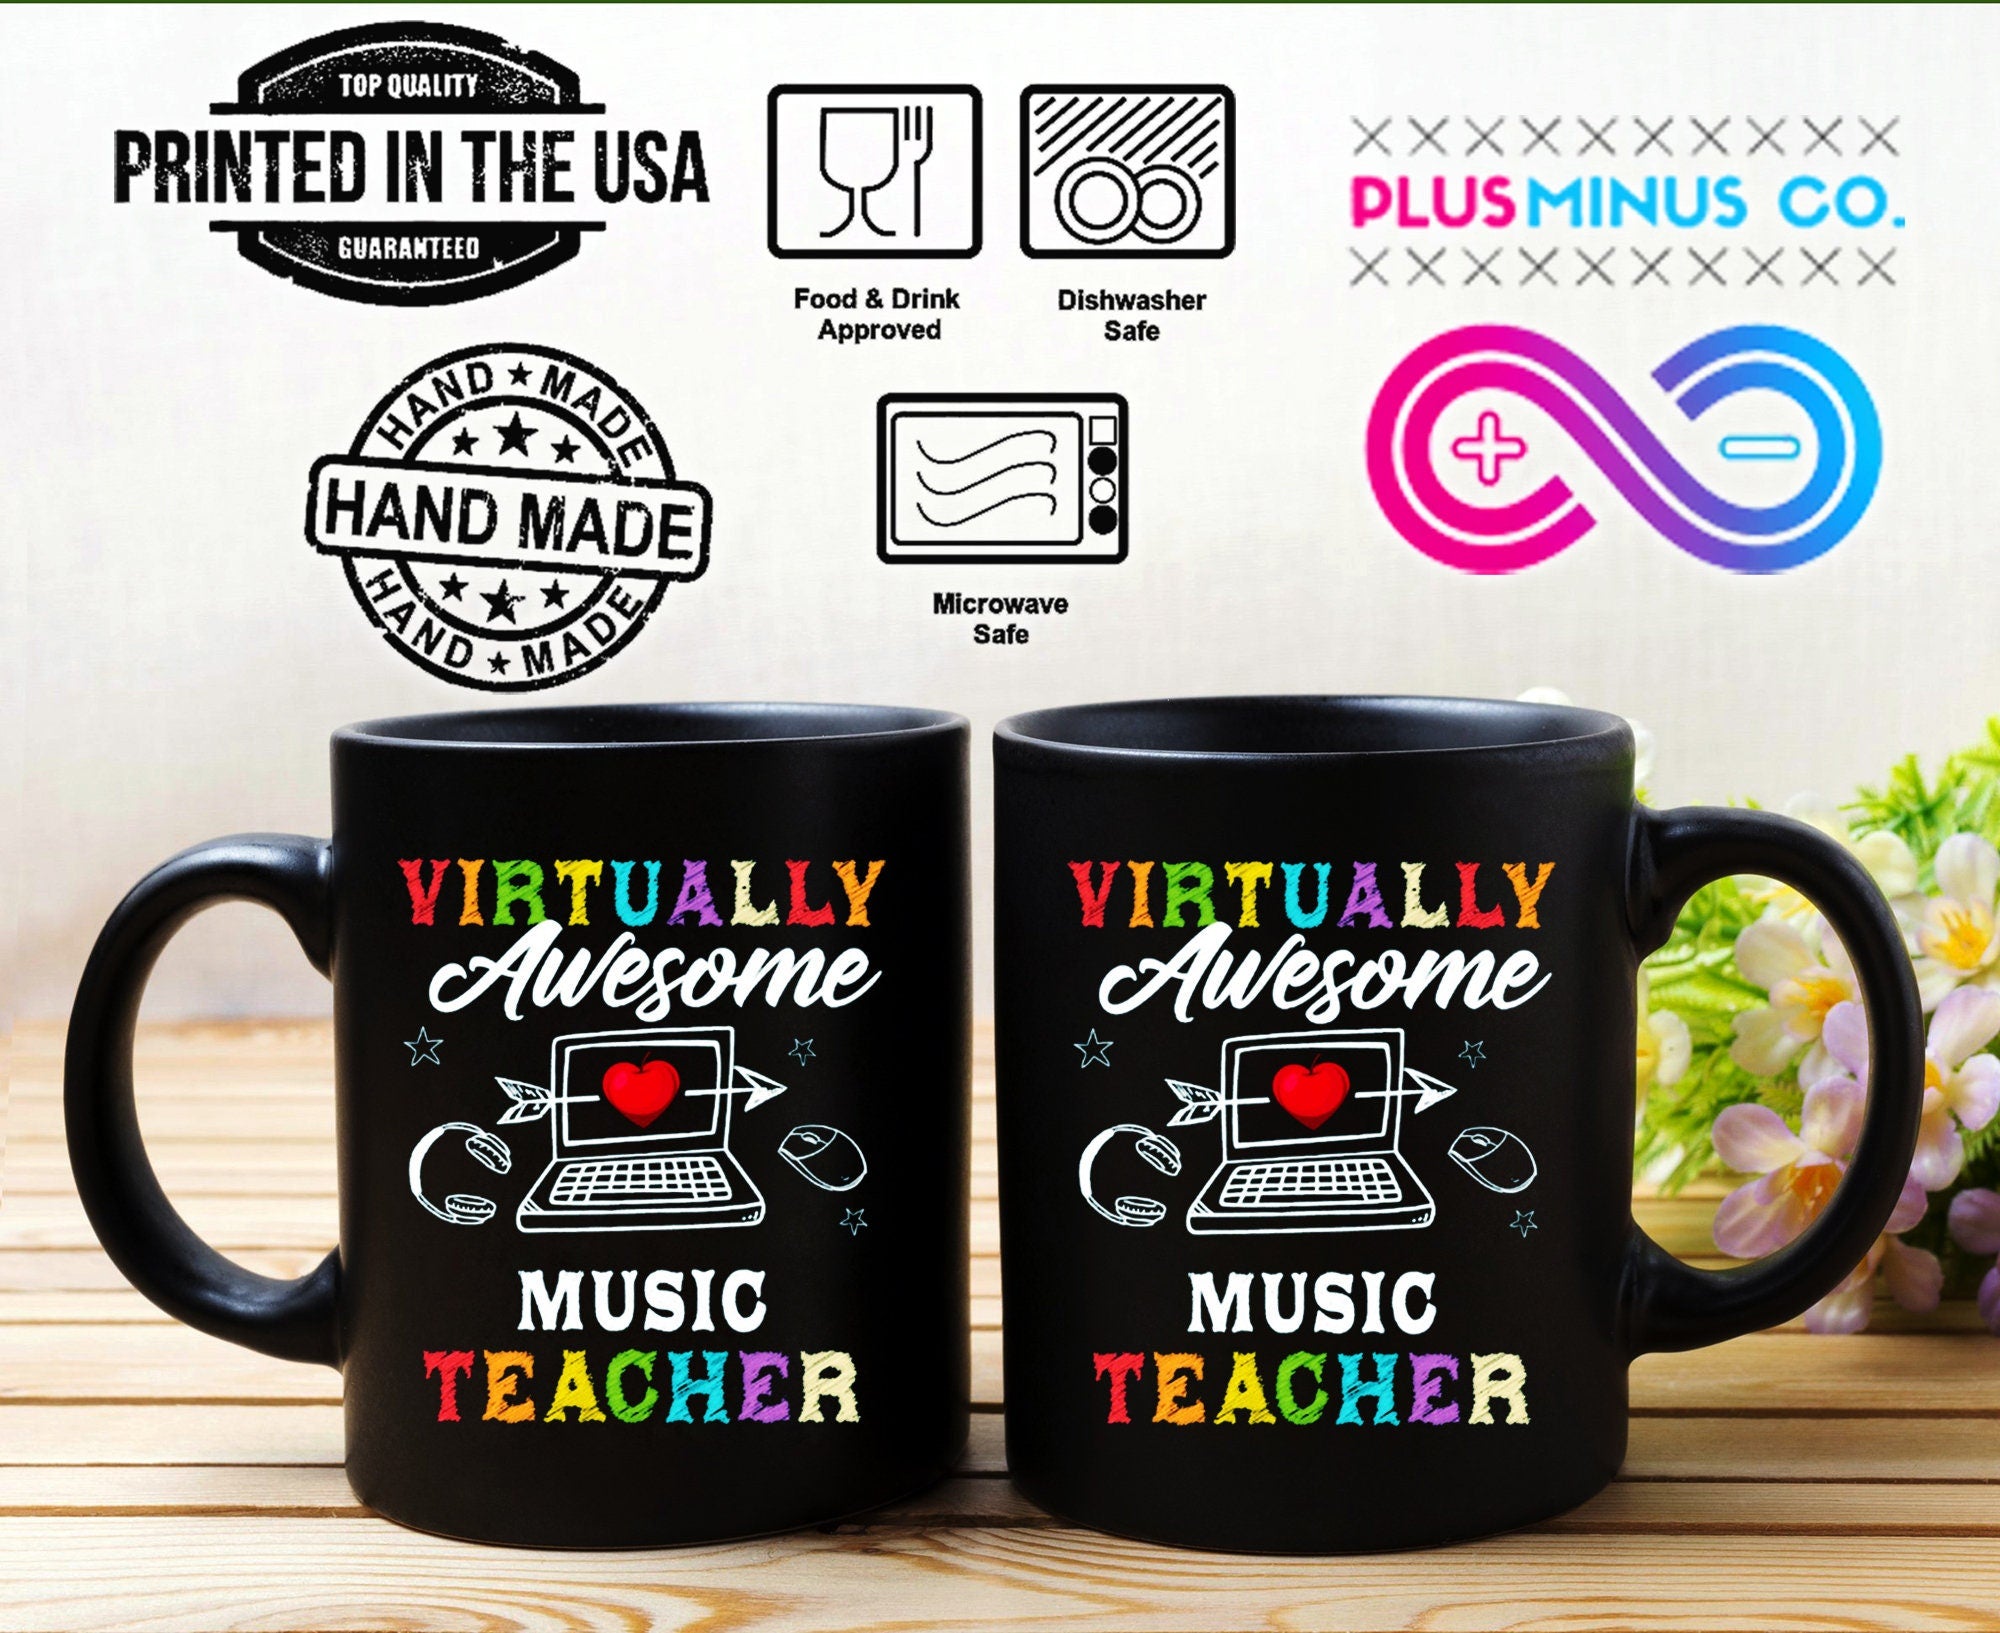 Virtually Awesome Music Teacher Black Mugs teacher birthday gift, back to school, teacher personalized gifts - plusminusco.com